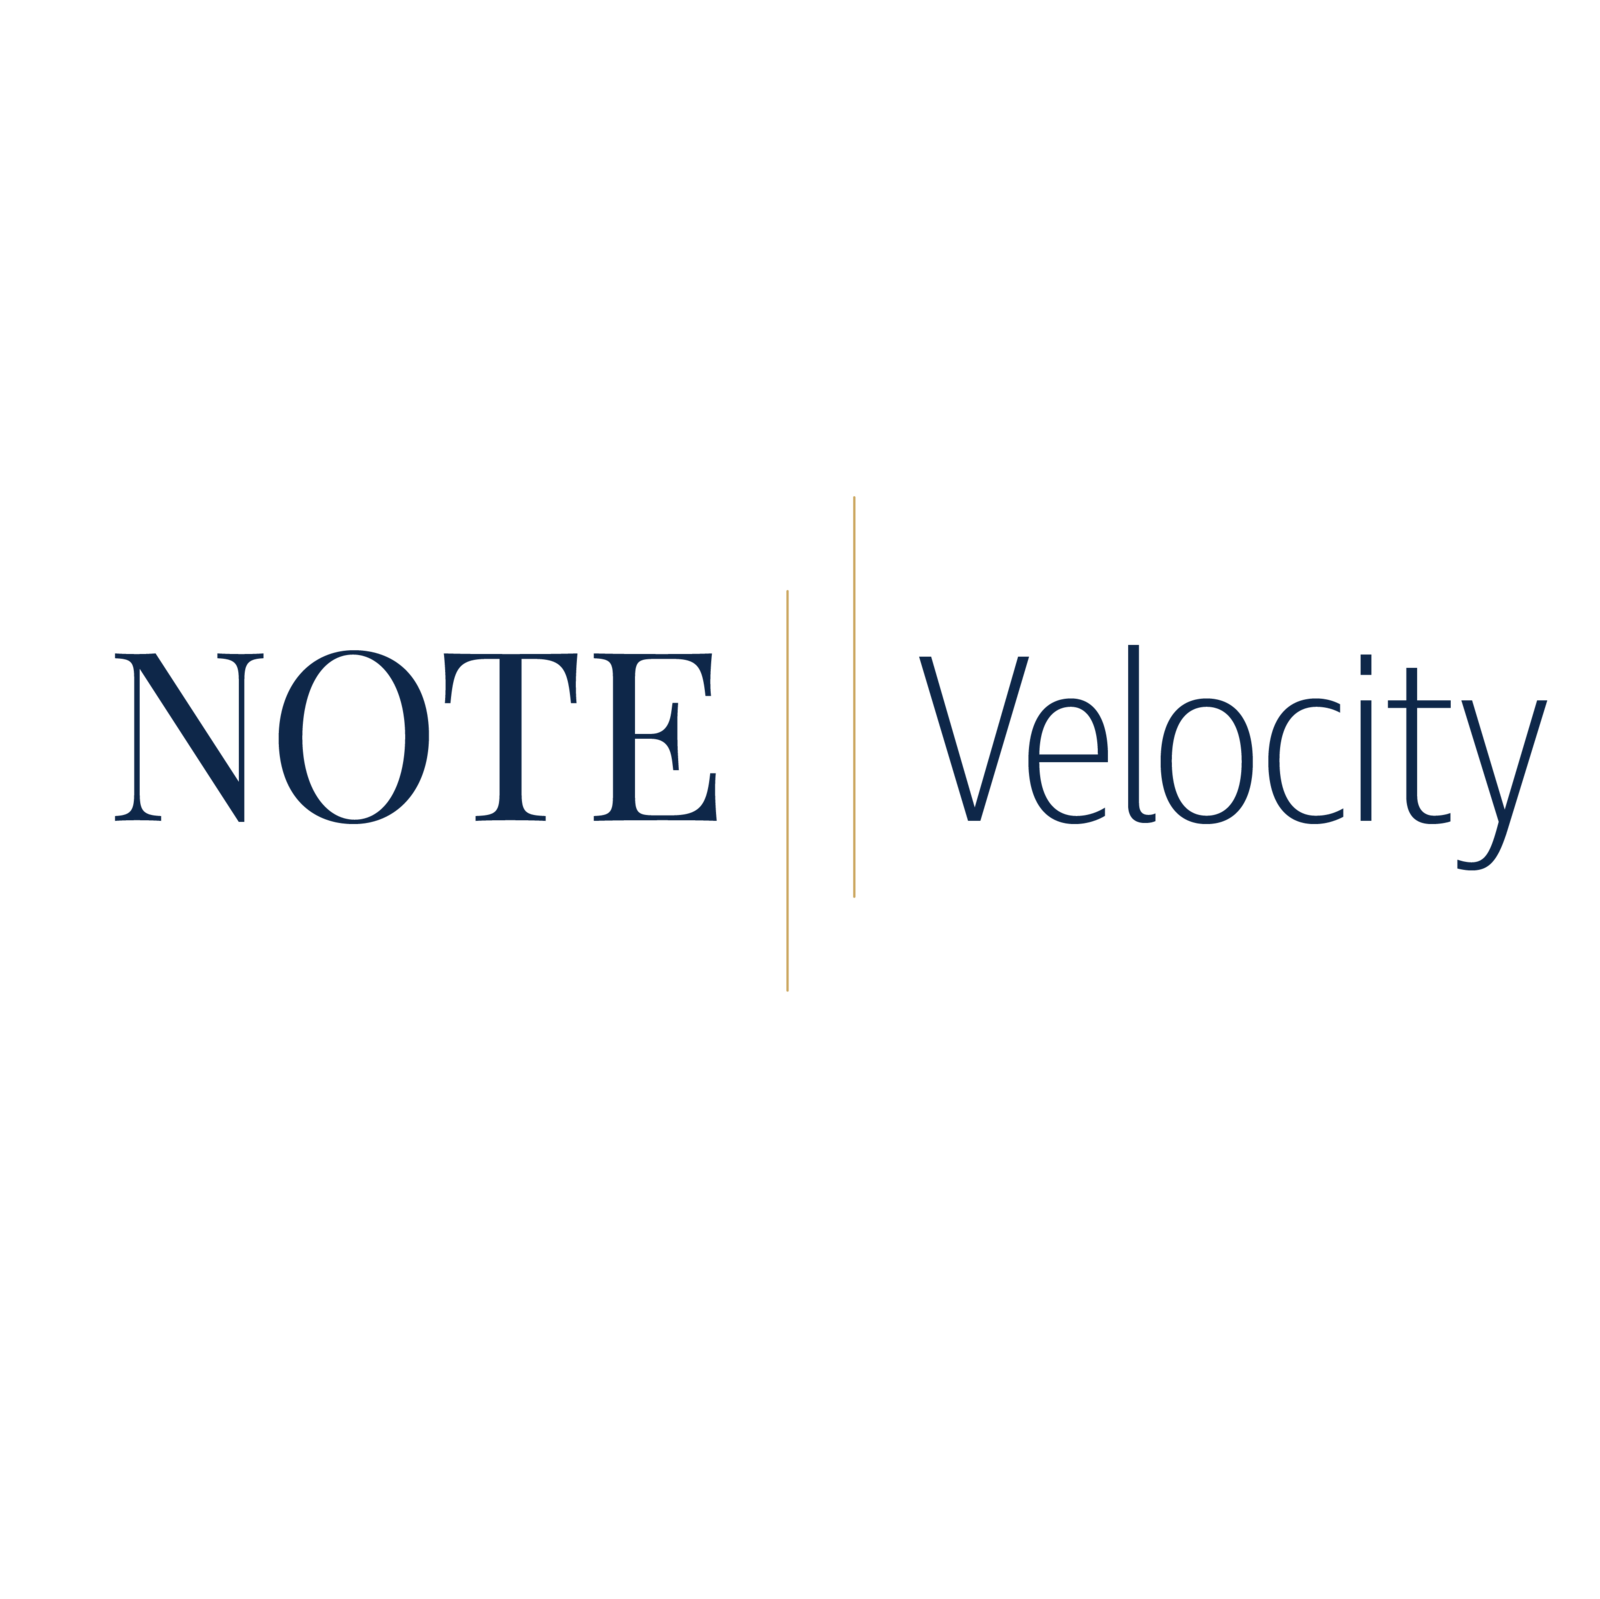 note velocity branding-03